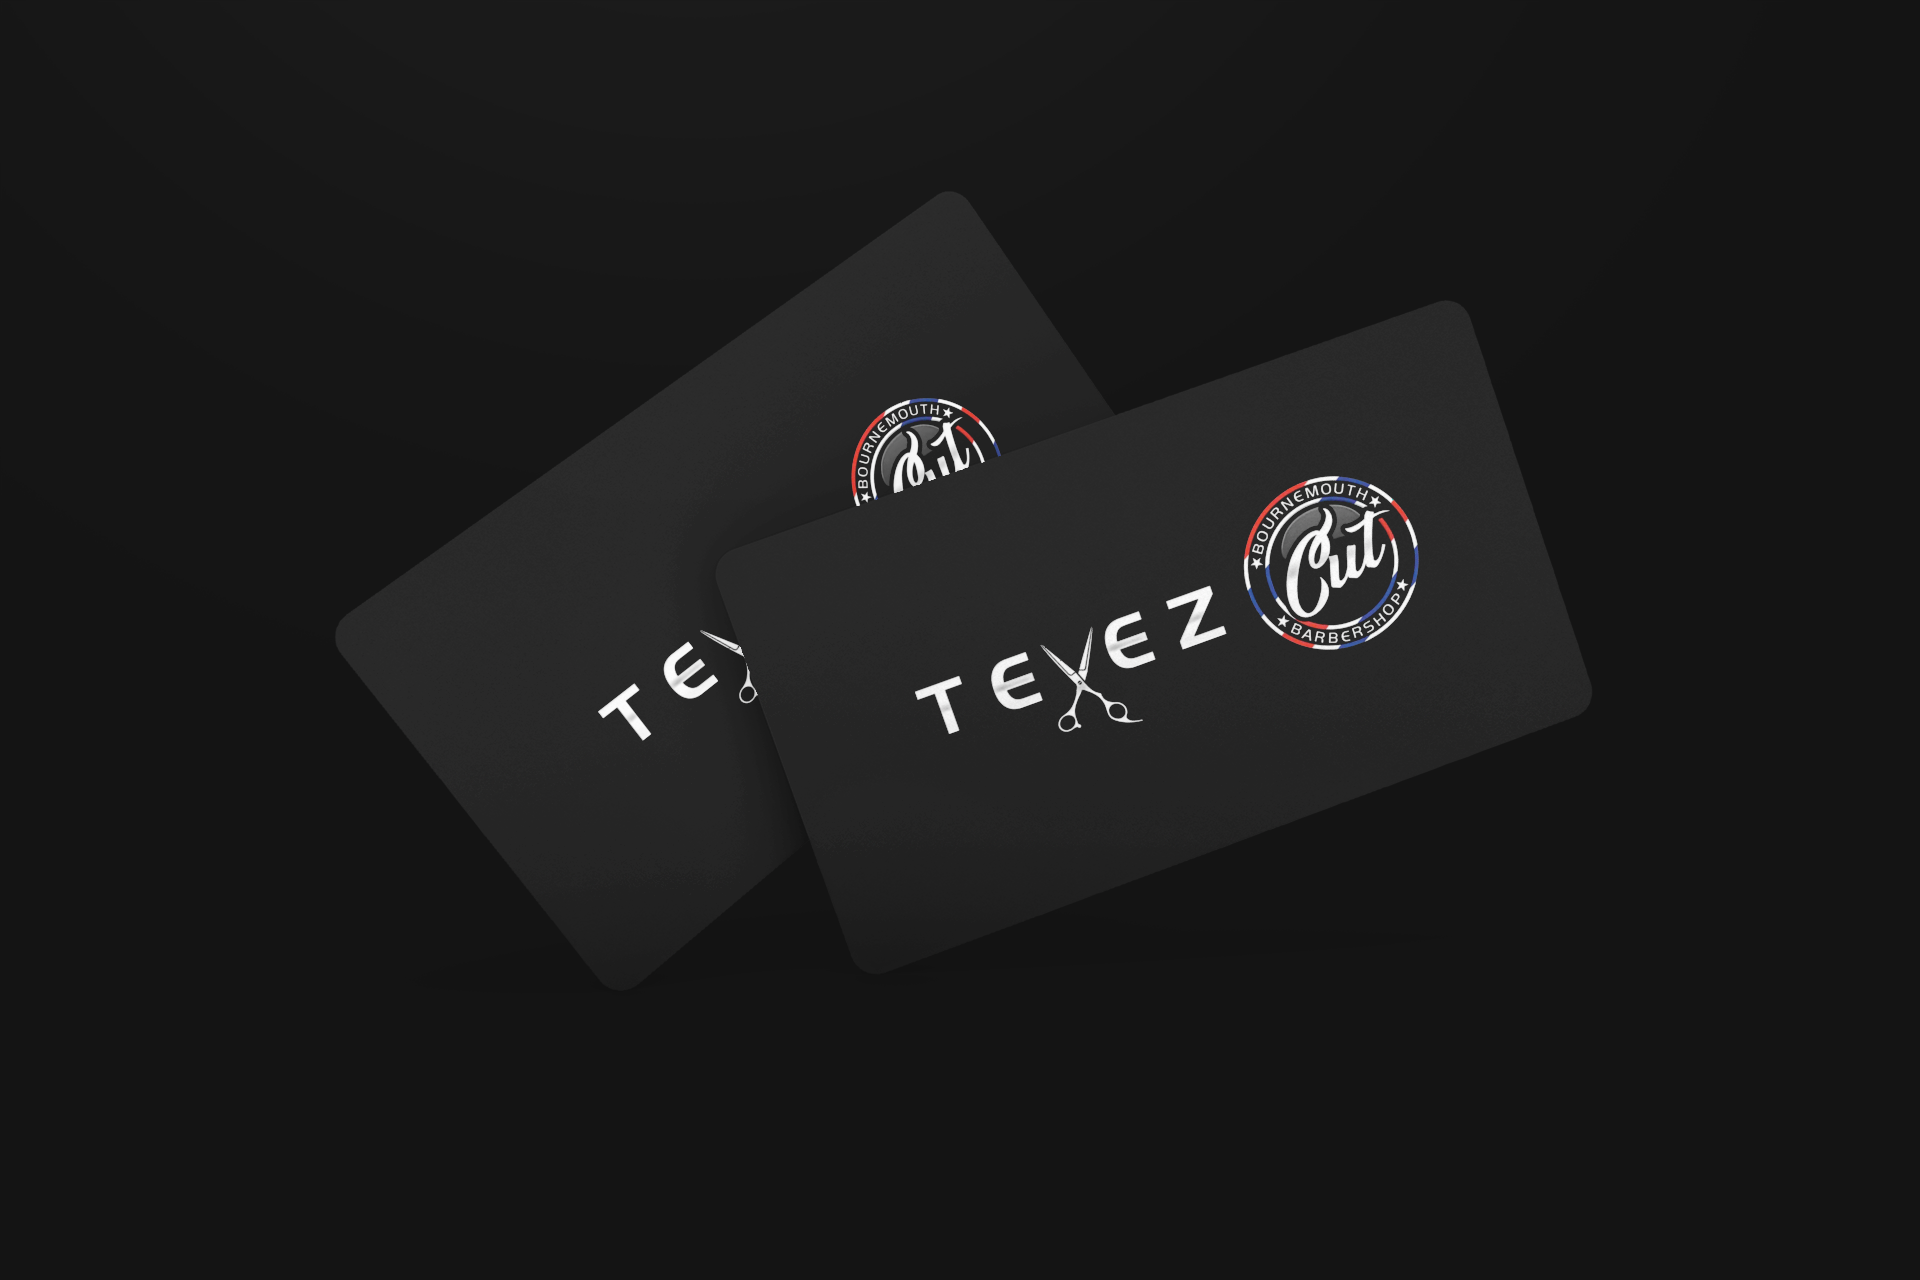 Black Tevez Cut business card designs by Web mind